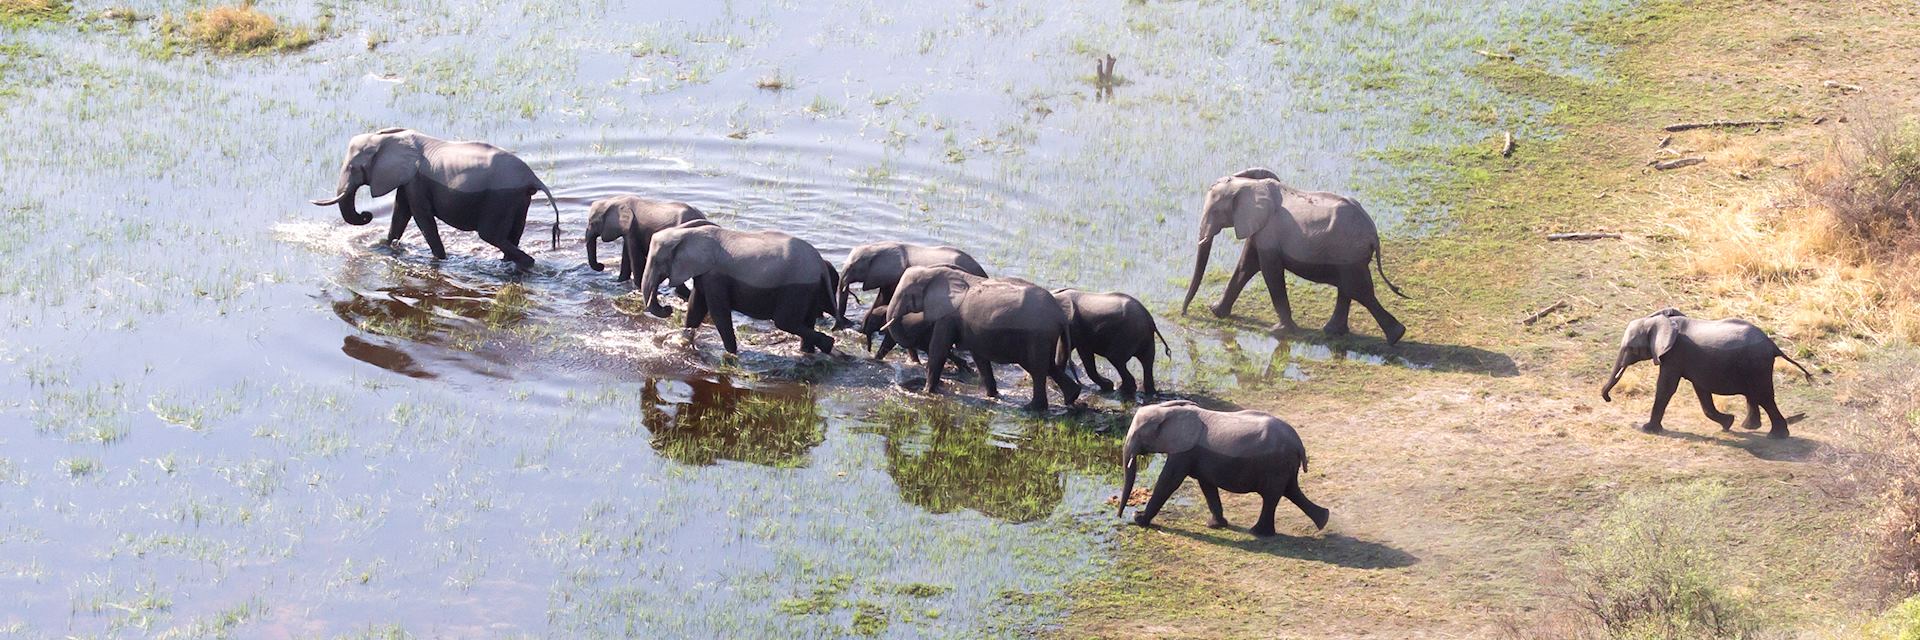 Aerial view of elephant in the Okavango Delta